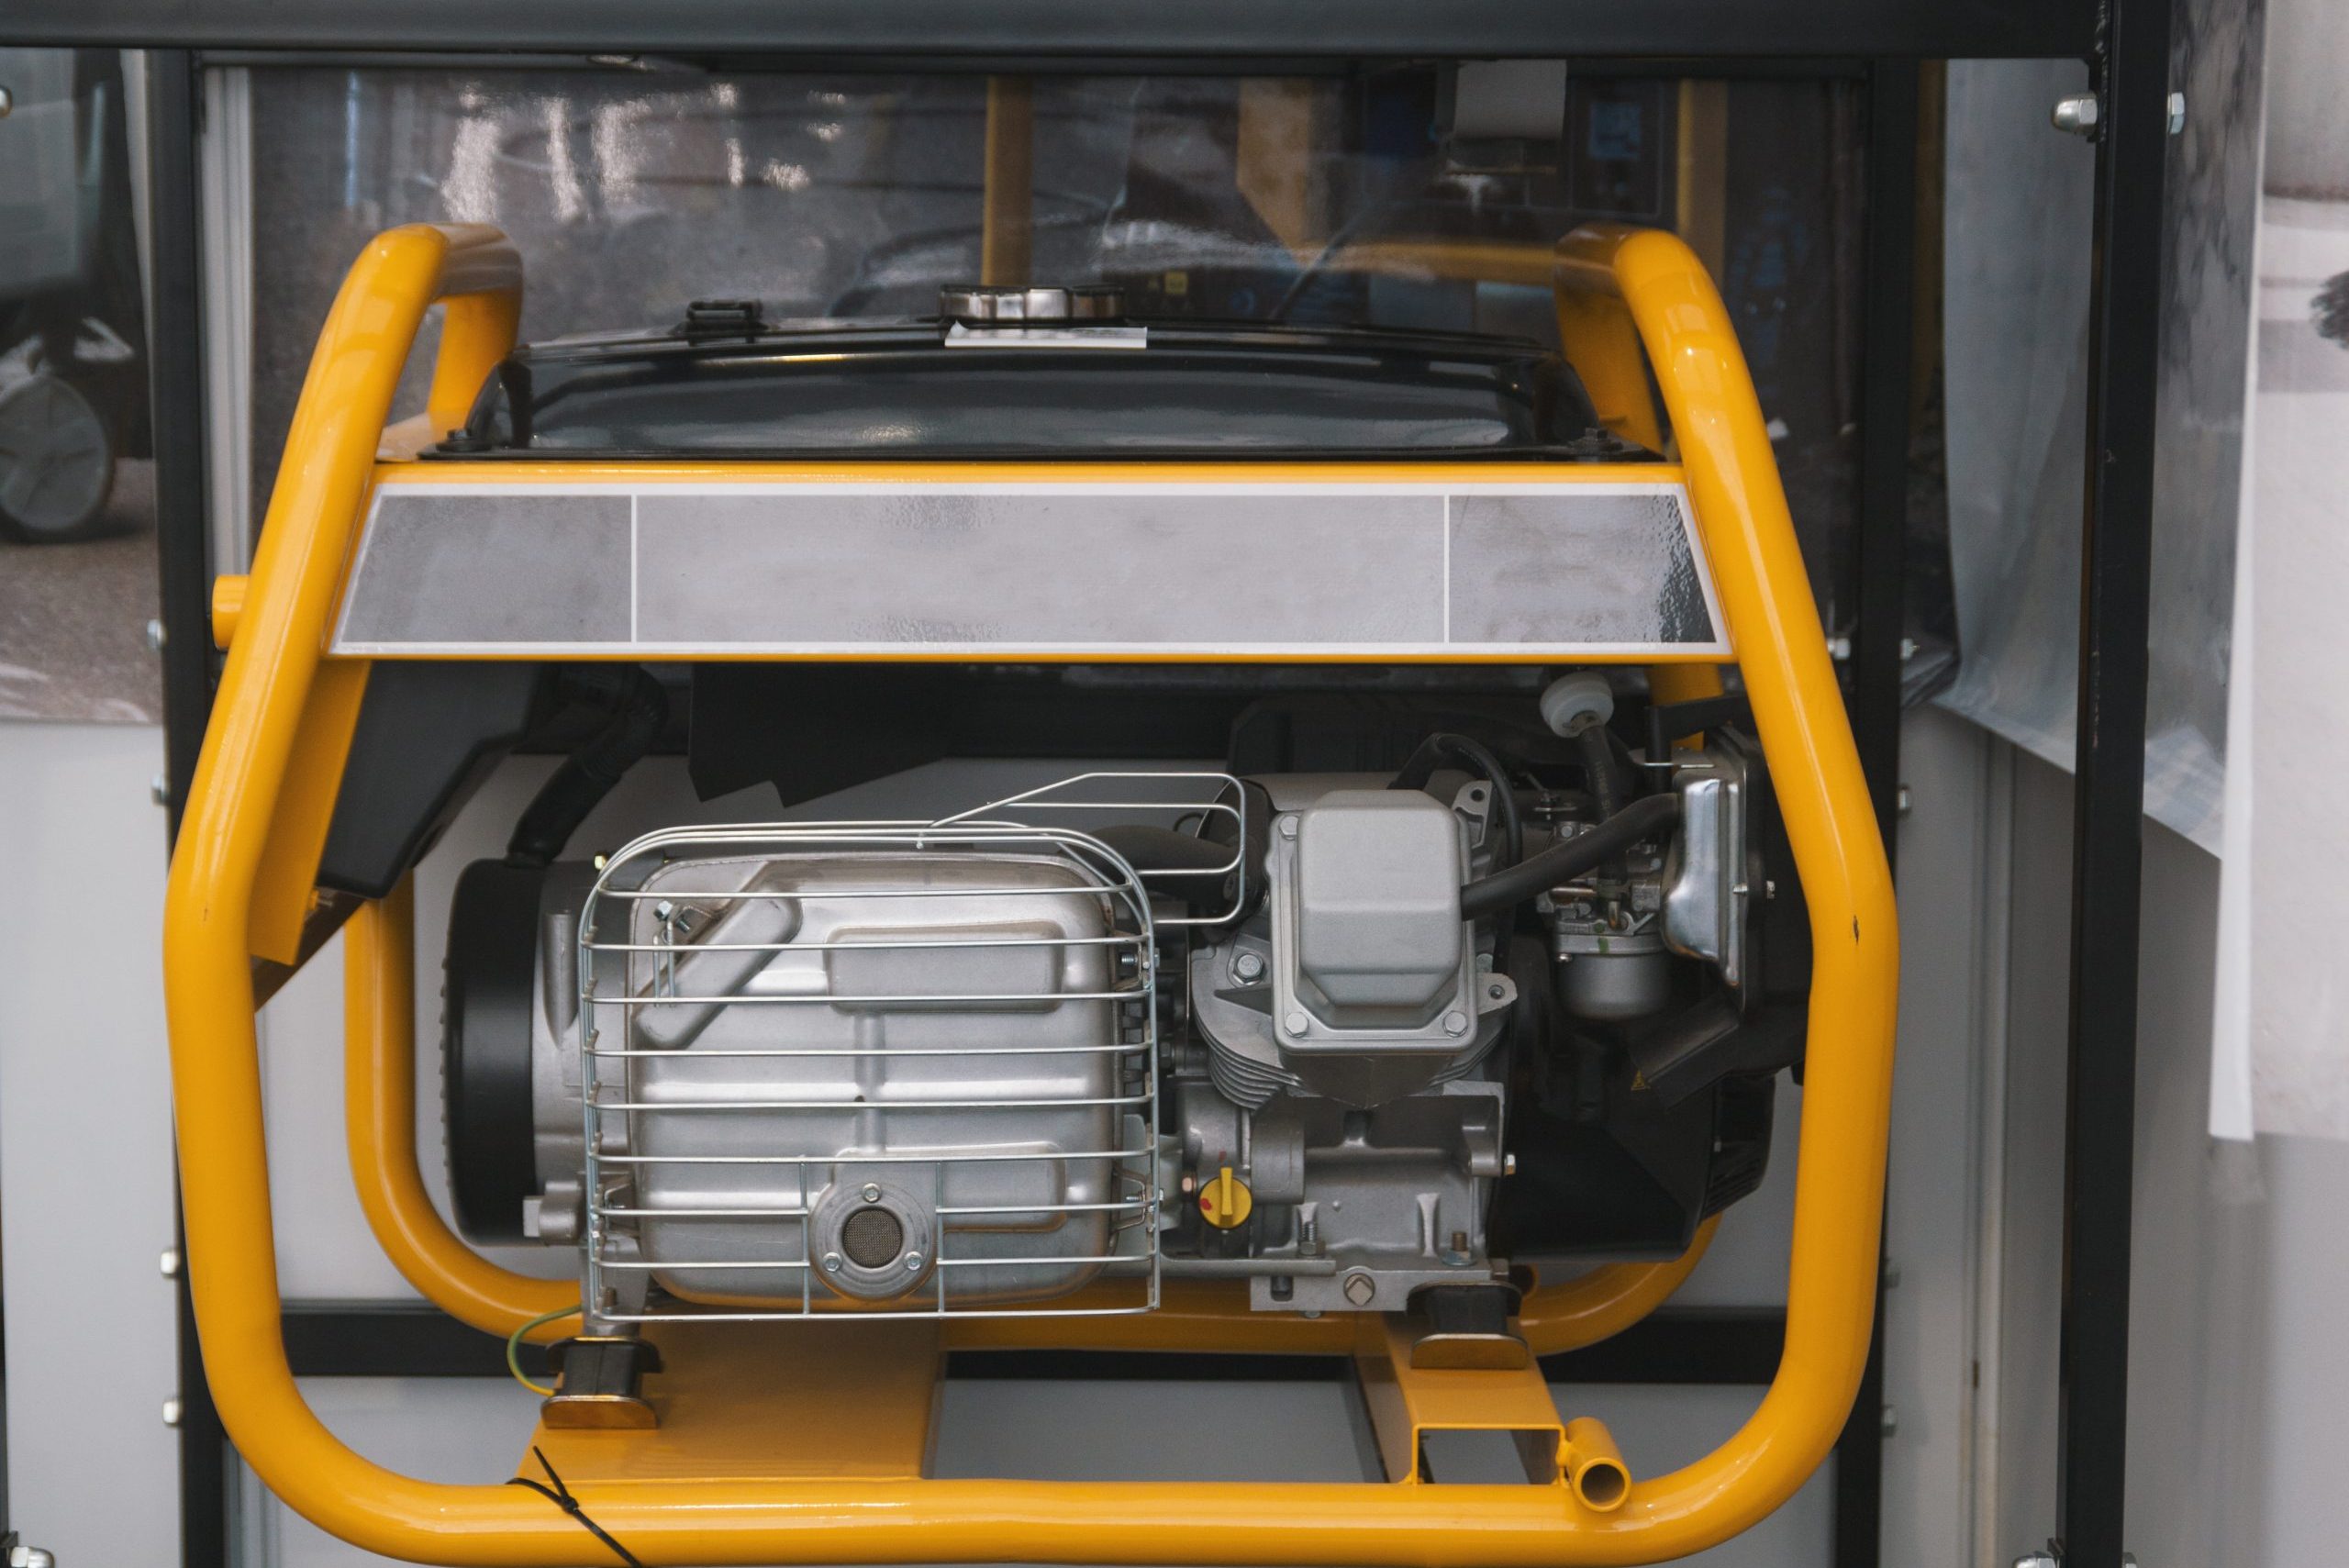 Gasoline Portable Generator close up view, horizontal shot